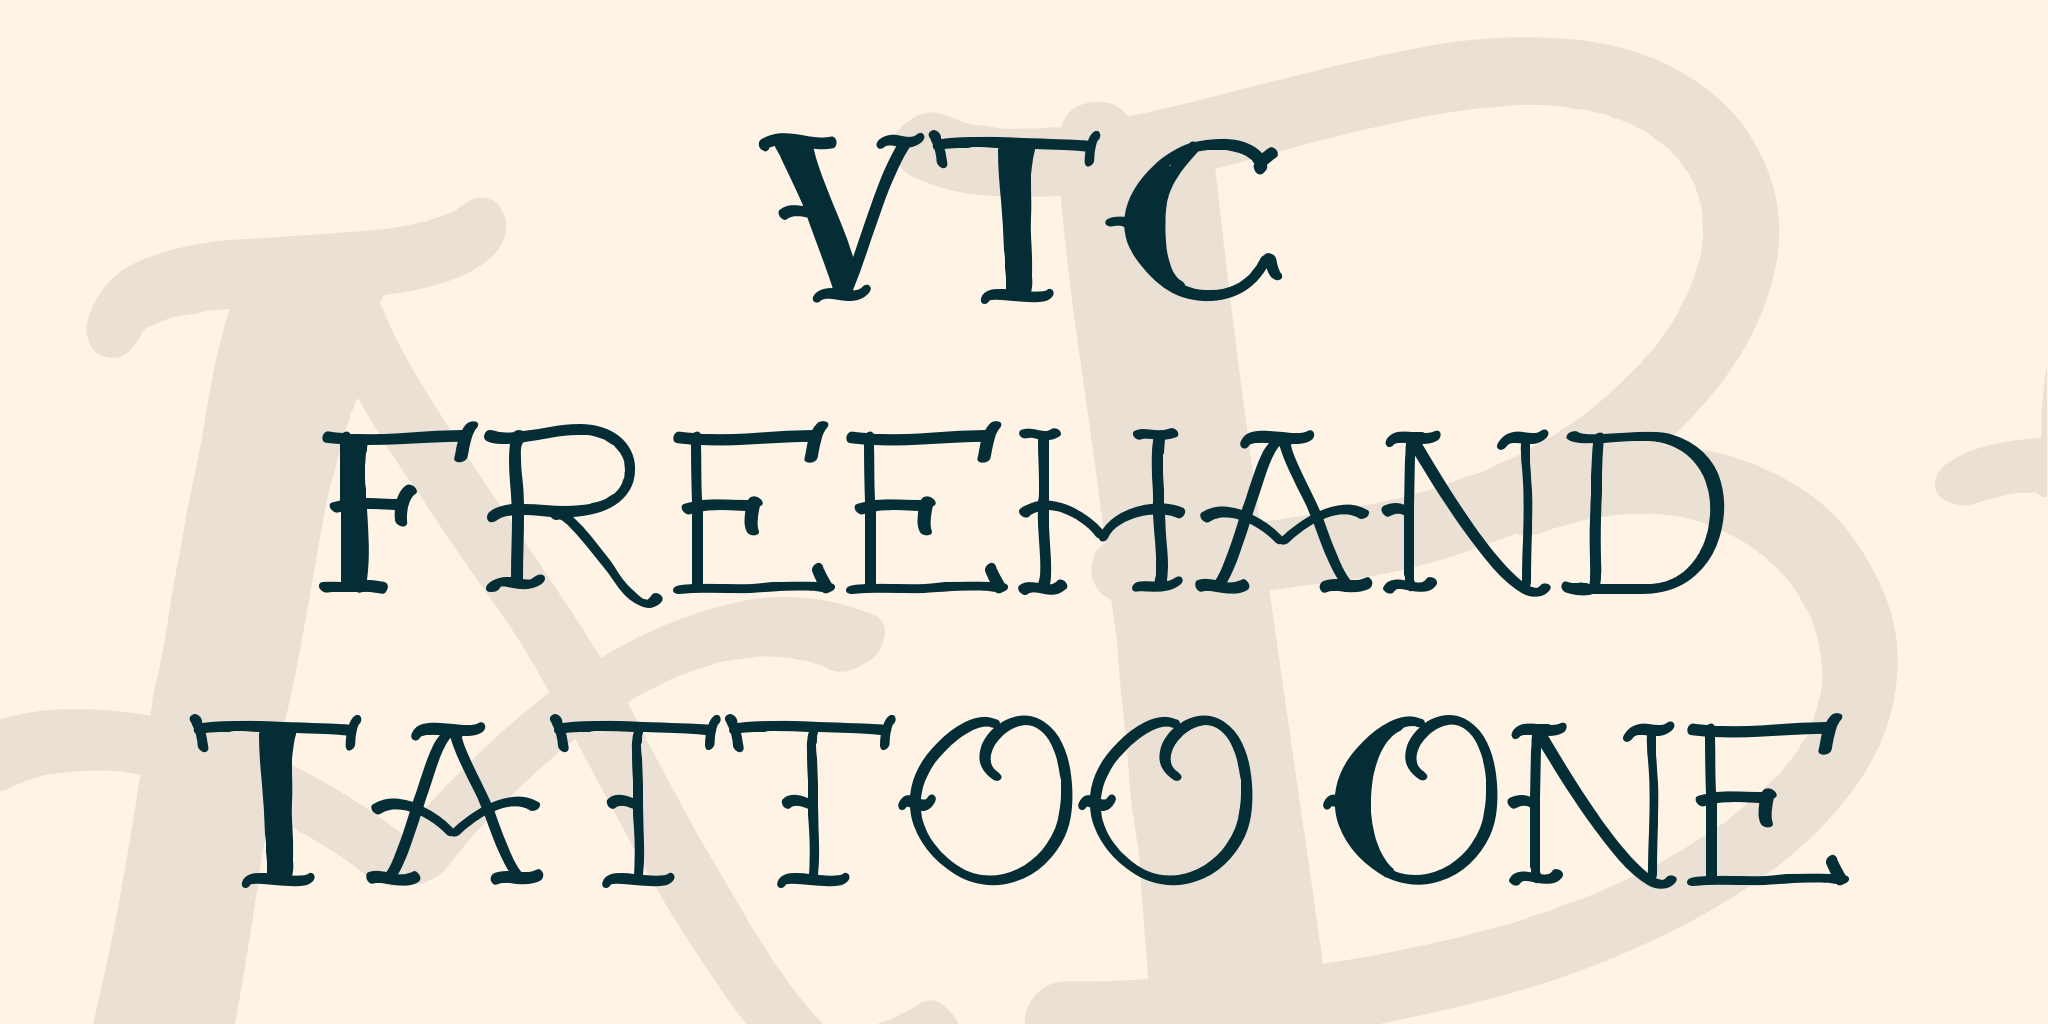 Vtc Freehand Tattoo One